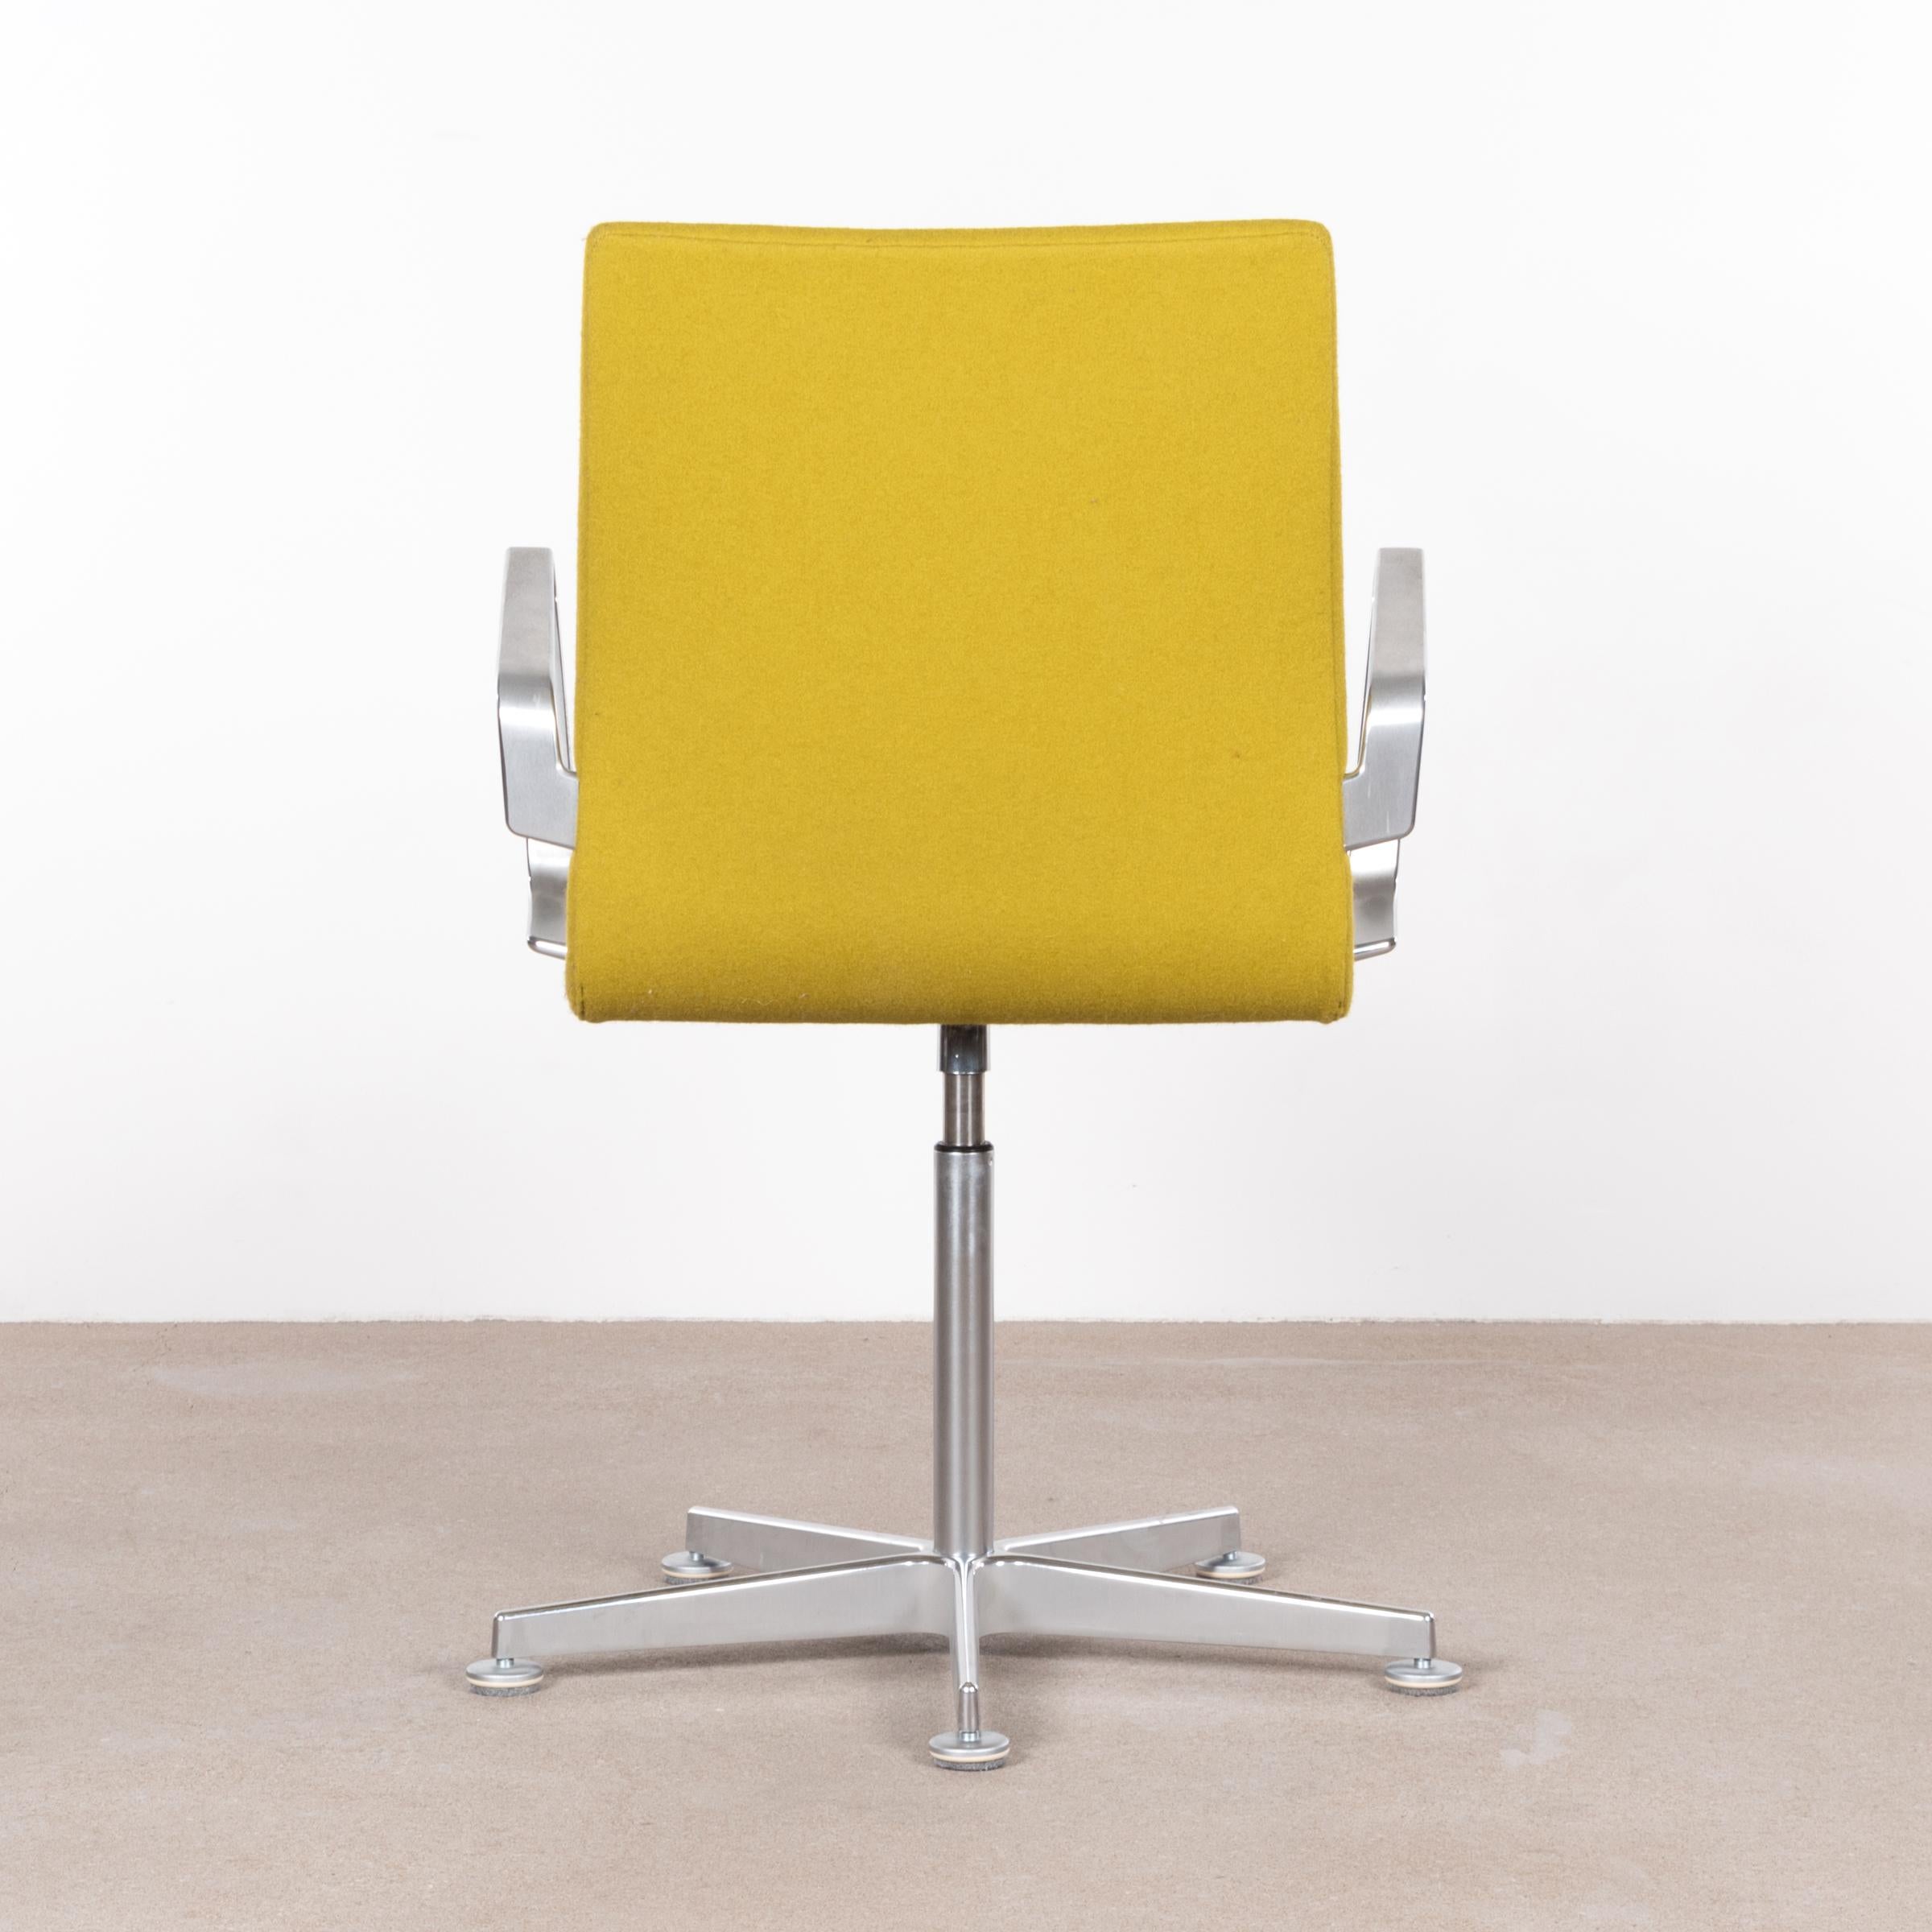 Scandinavian Modern Arne Jacobsen Oxford Chair in Lime Green Wool for Fritz Hansen, Denmark